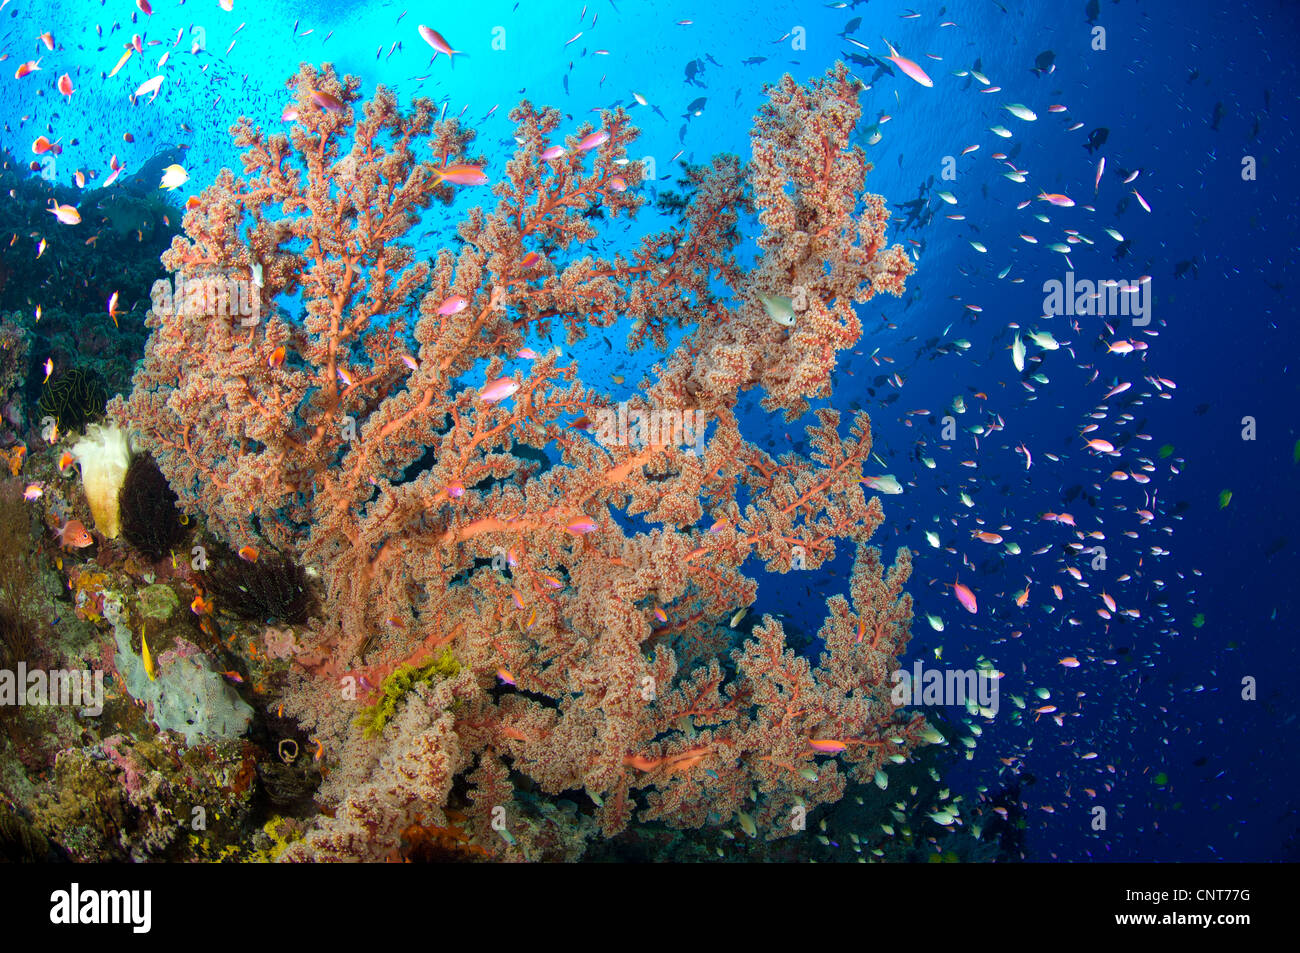 Spectacular reef scene showing sea fan (Semperina sp.) at Barney's reef, Witu Islands, Papua New Guinea. Stock Photo